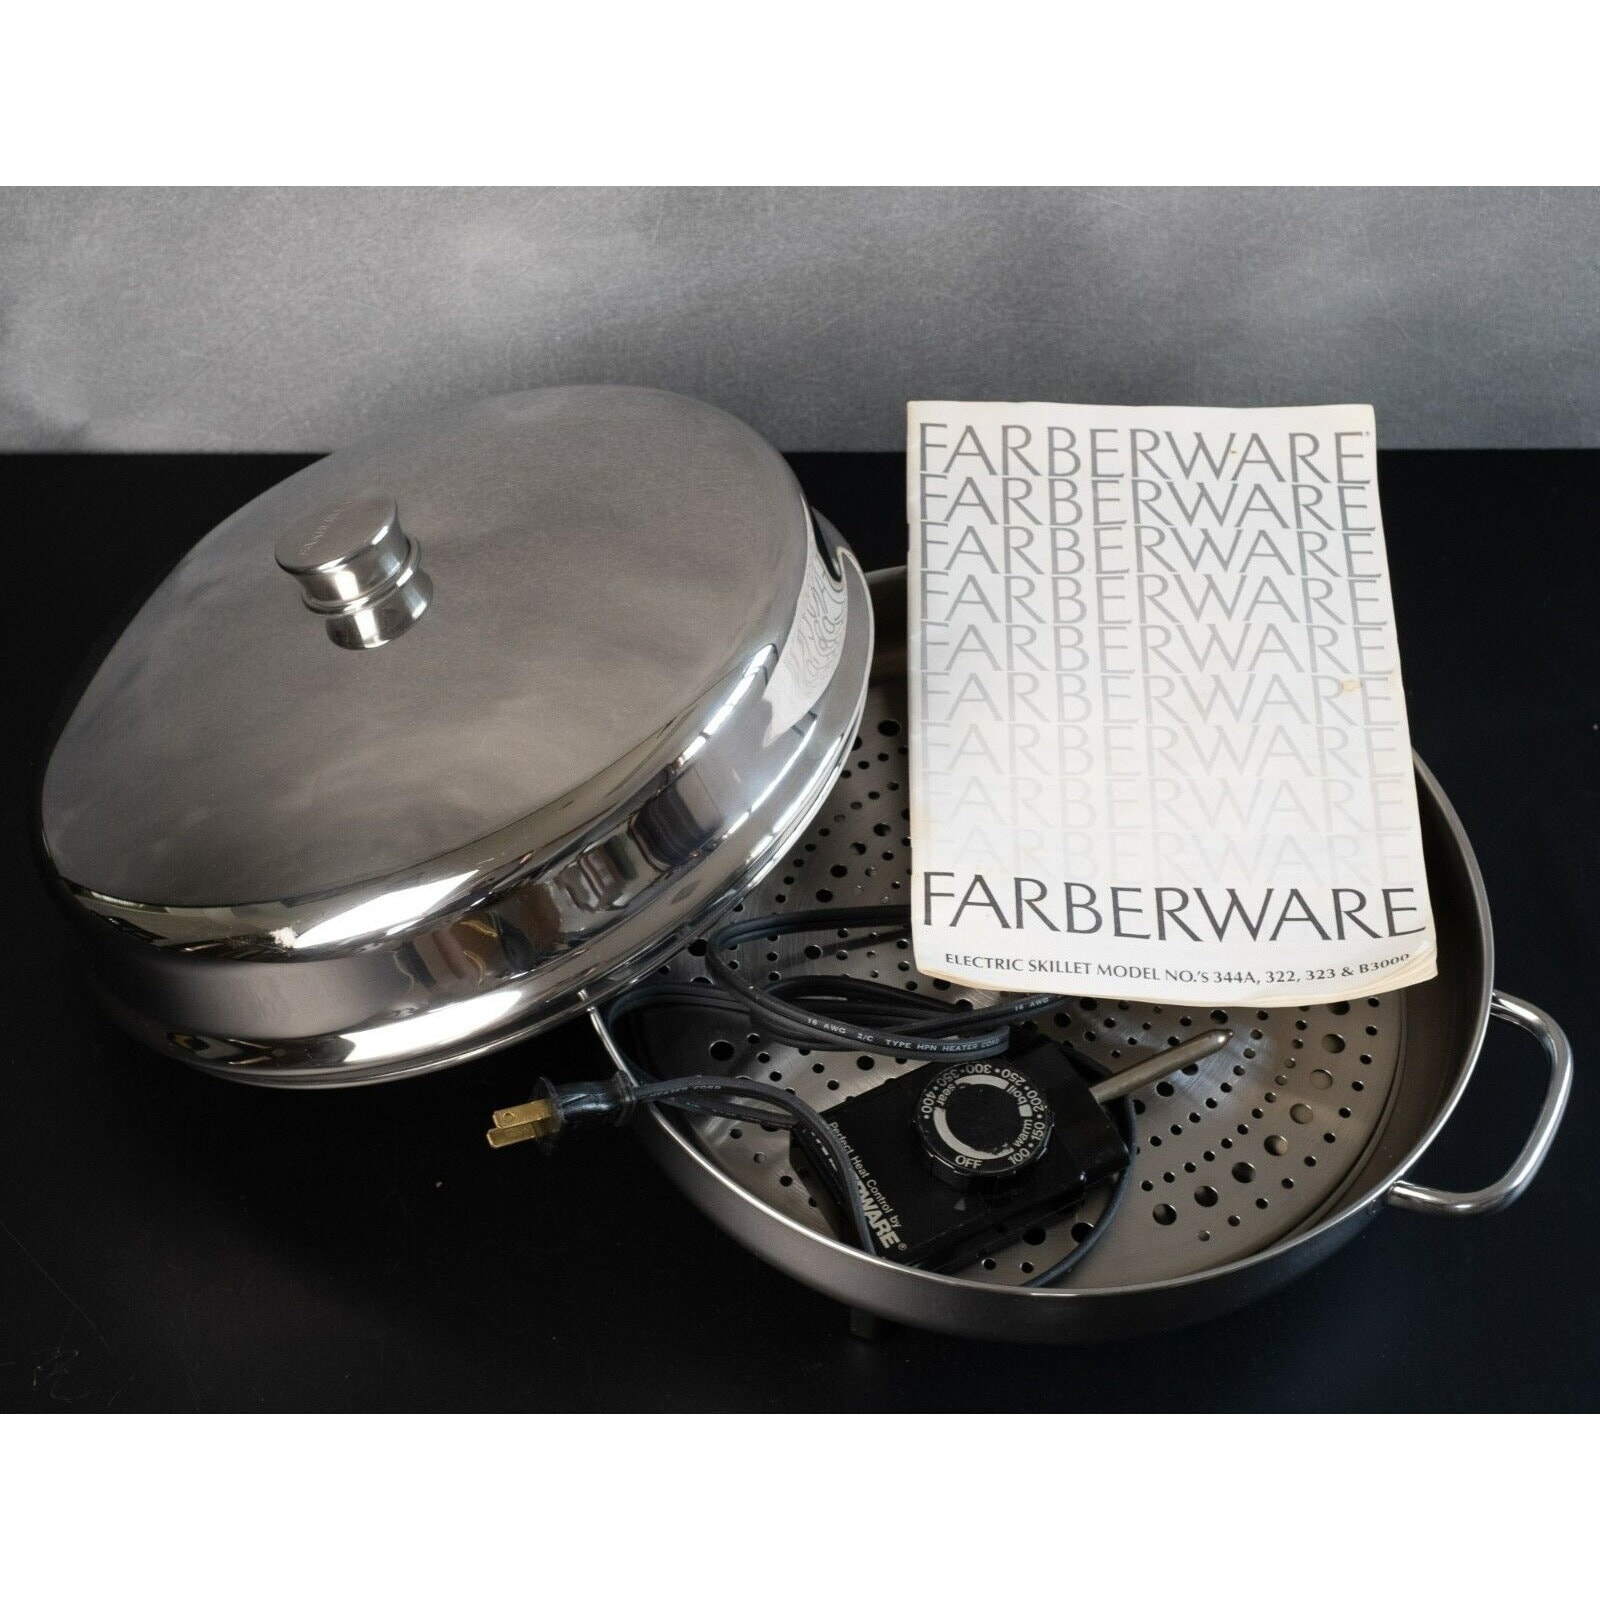 Vintage Electric Skillet Farberware perfect Heat